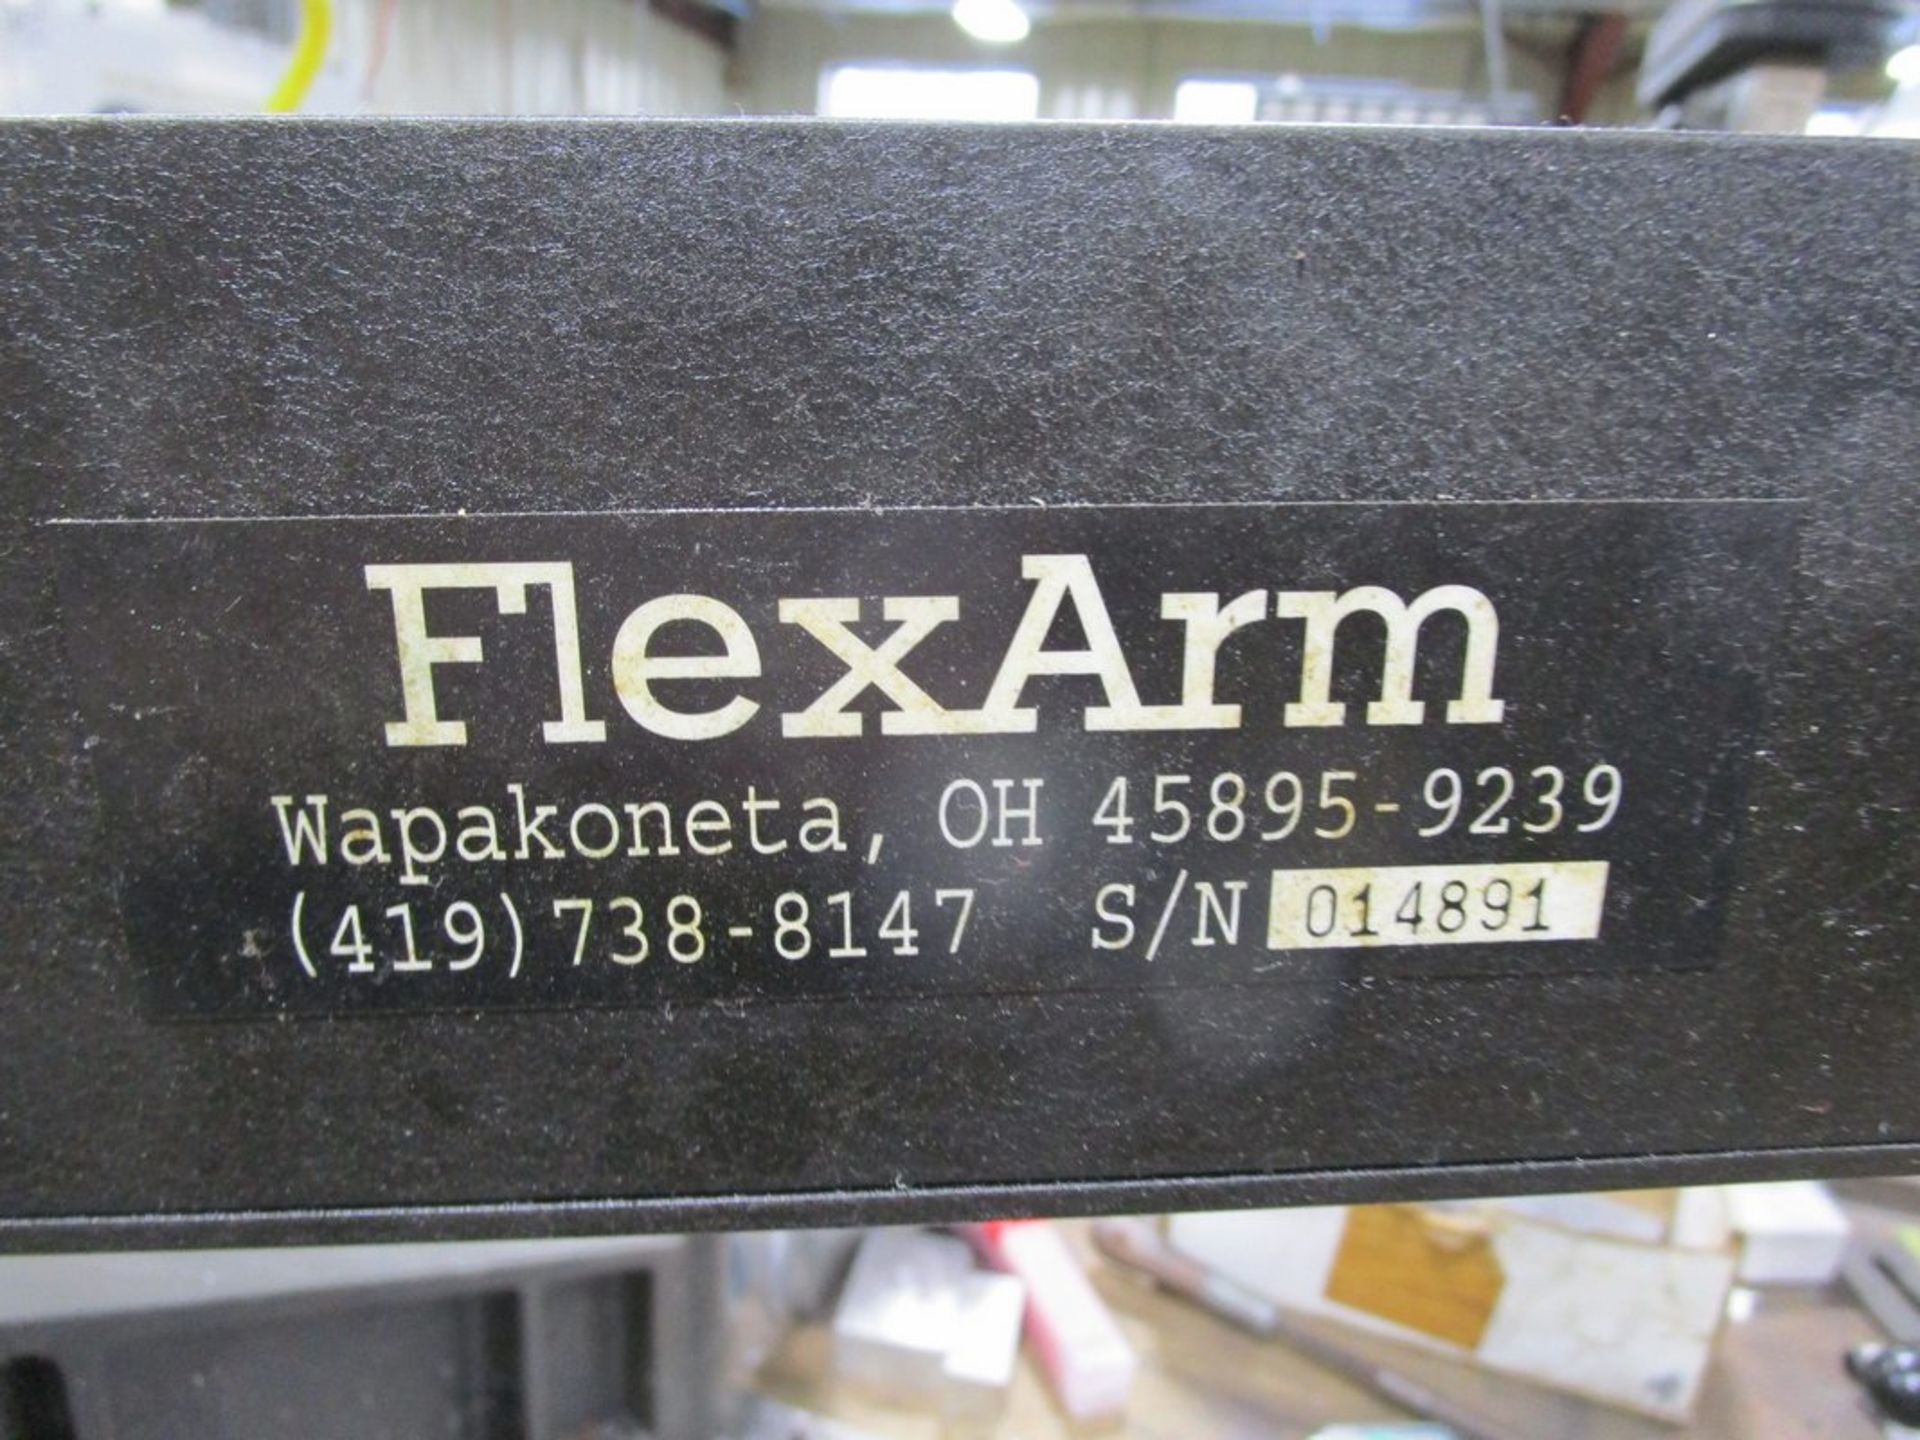 Flex Arm Work Station, S/N 014891 - Image 2 of 4